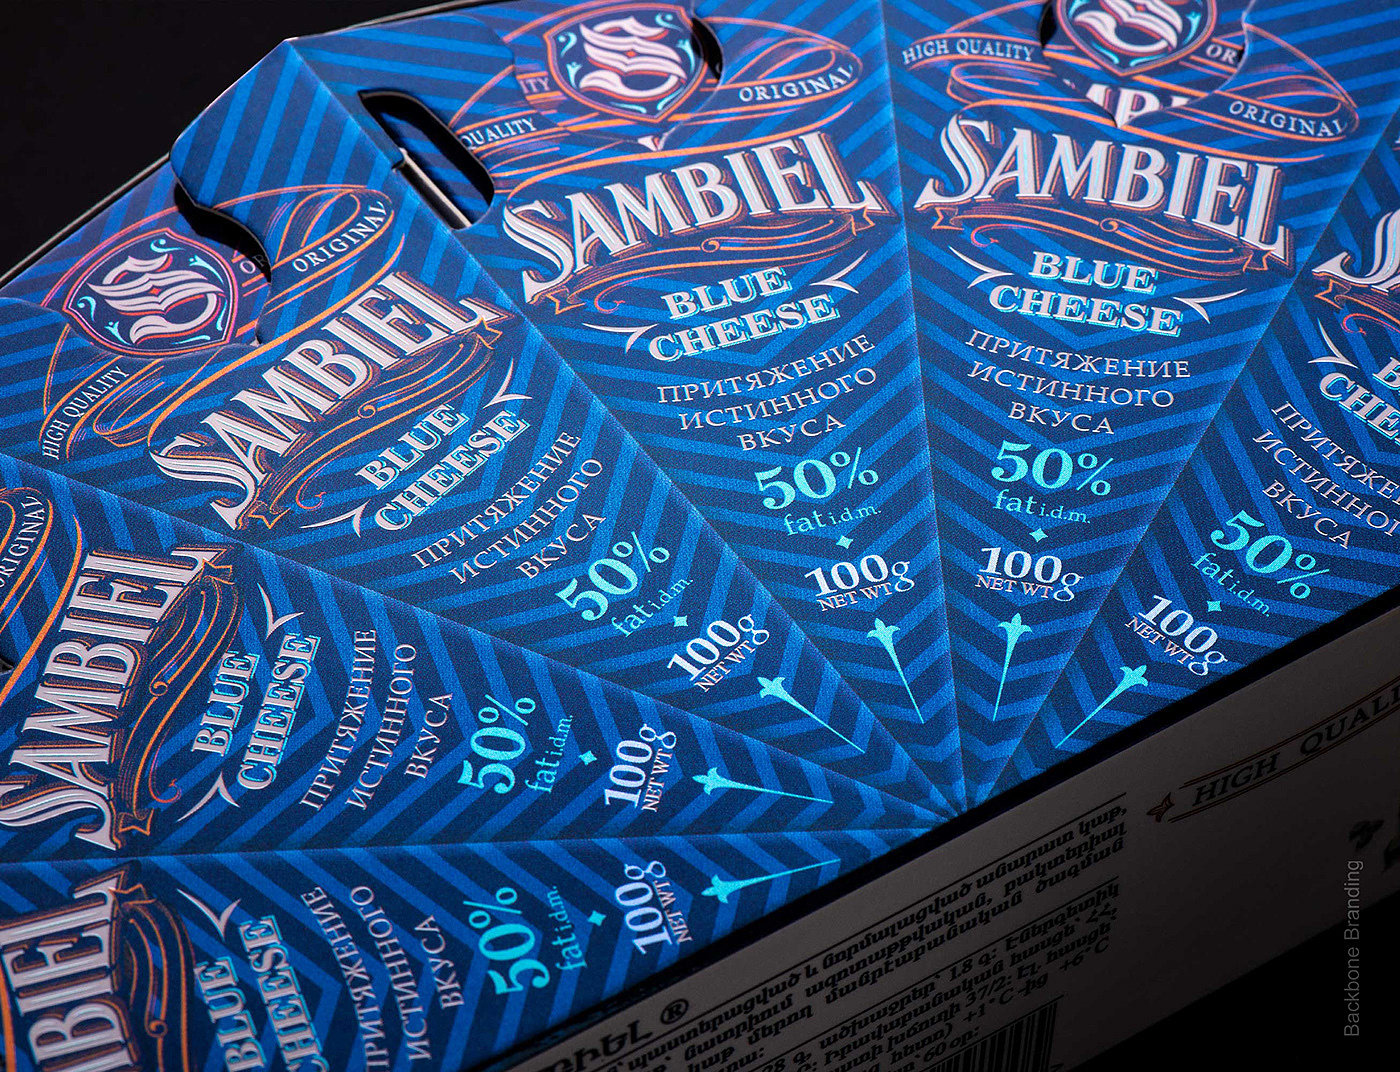 SAMBIEL，包装设计，食品，